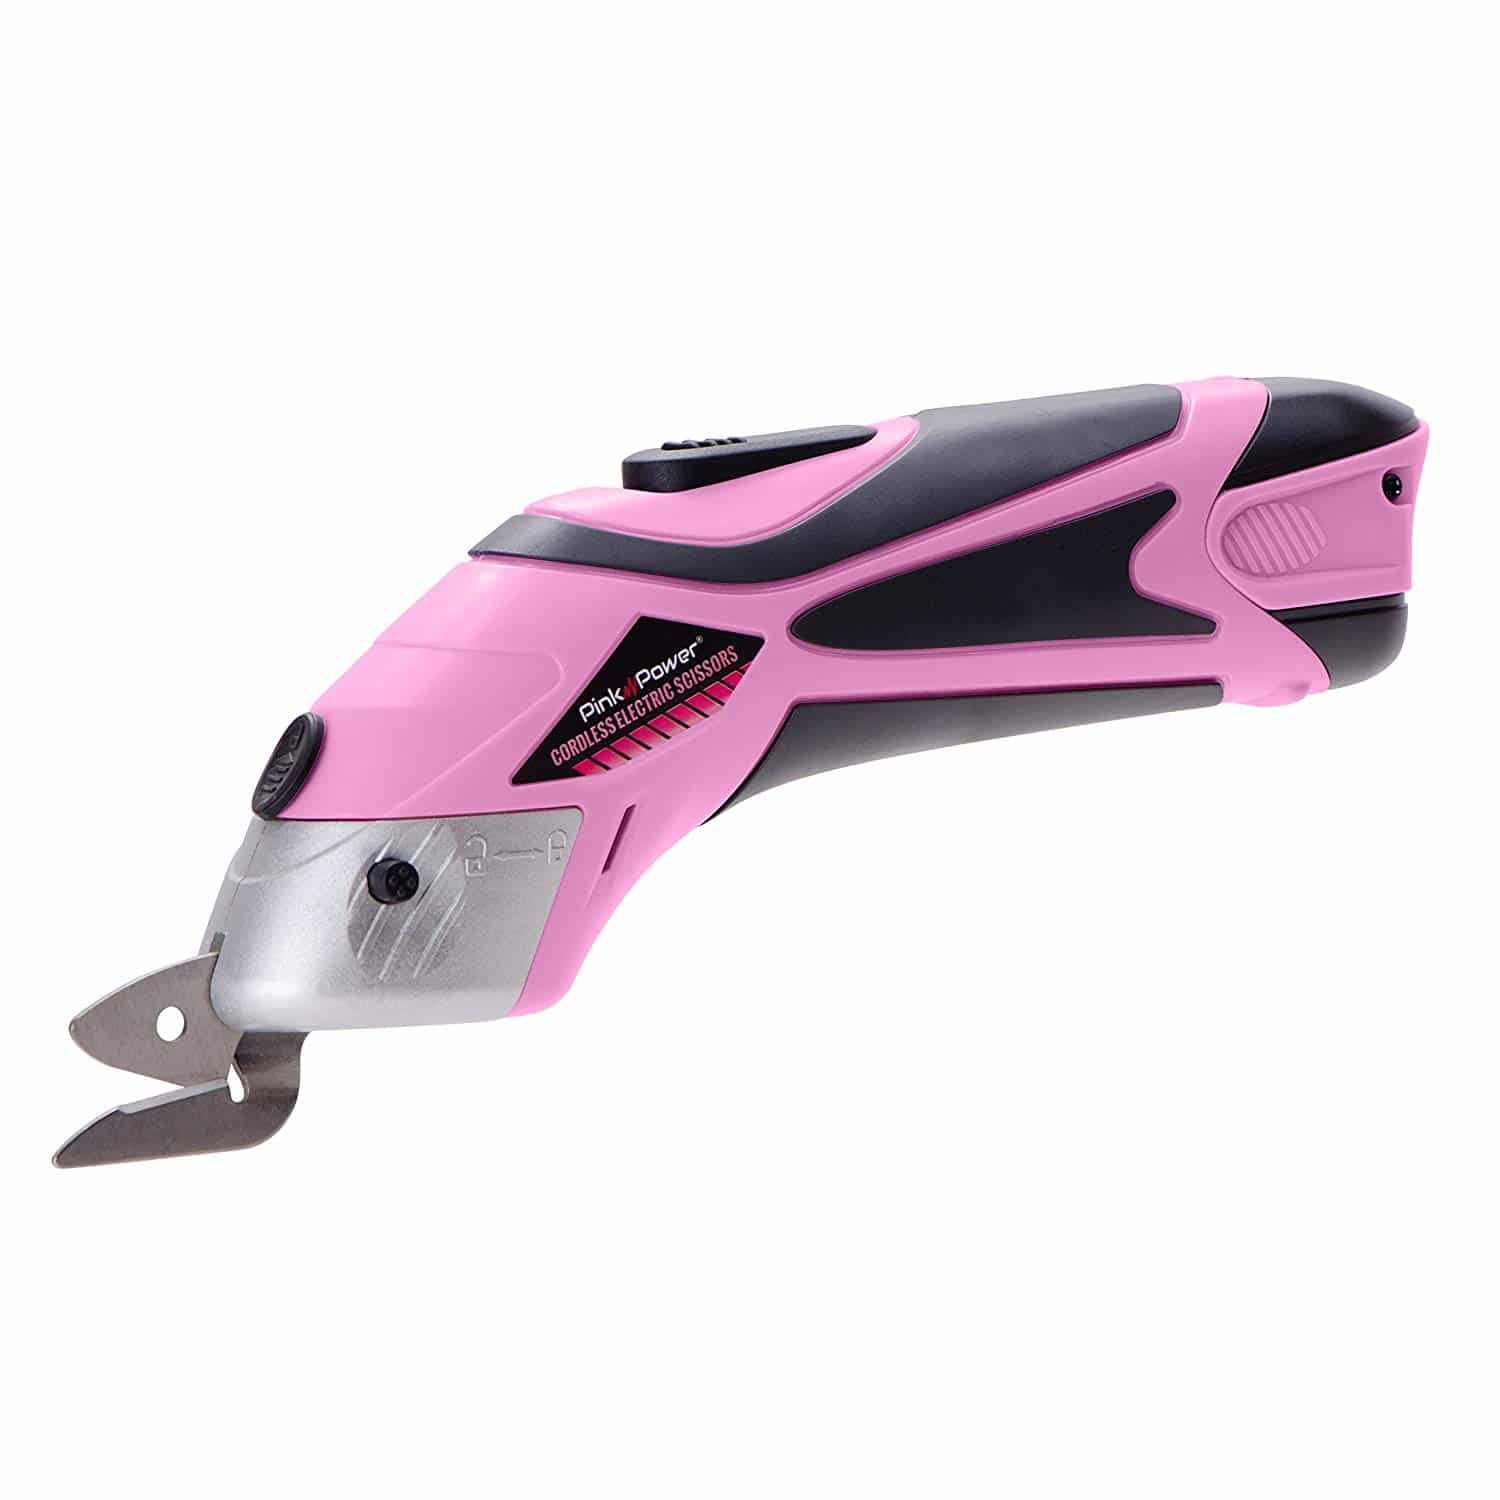 Pink Power Electric Fabric Scissors